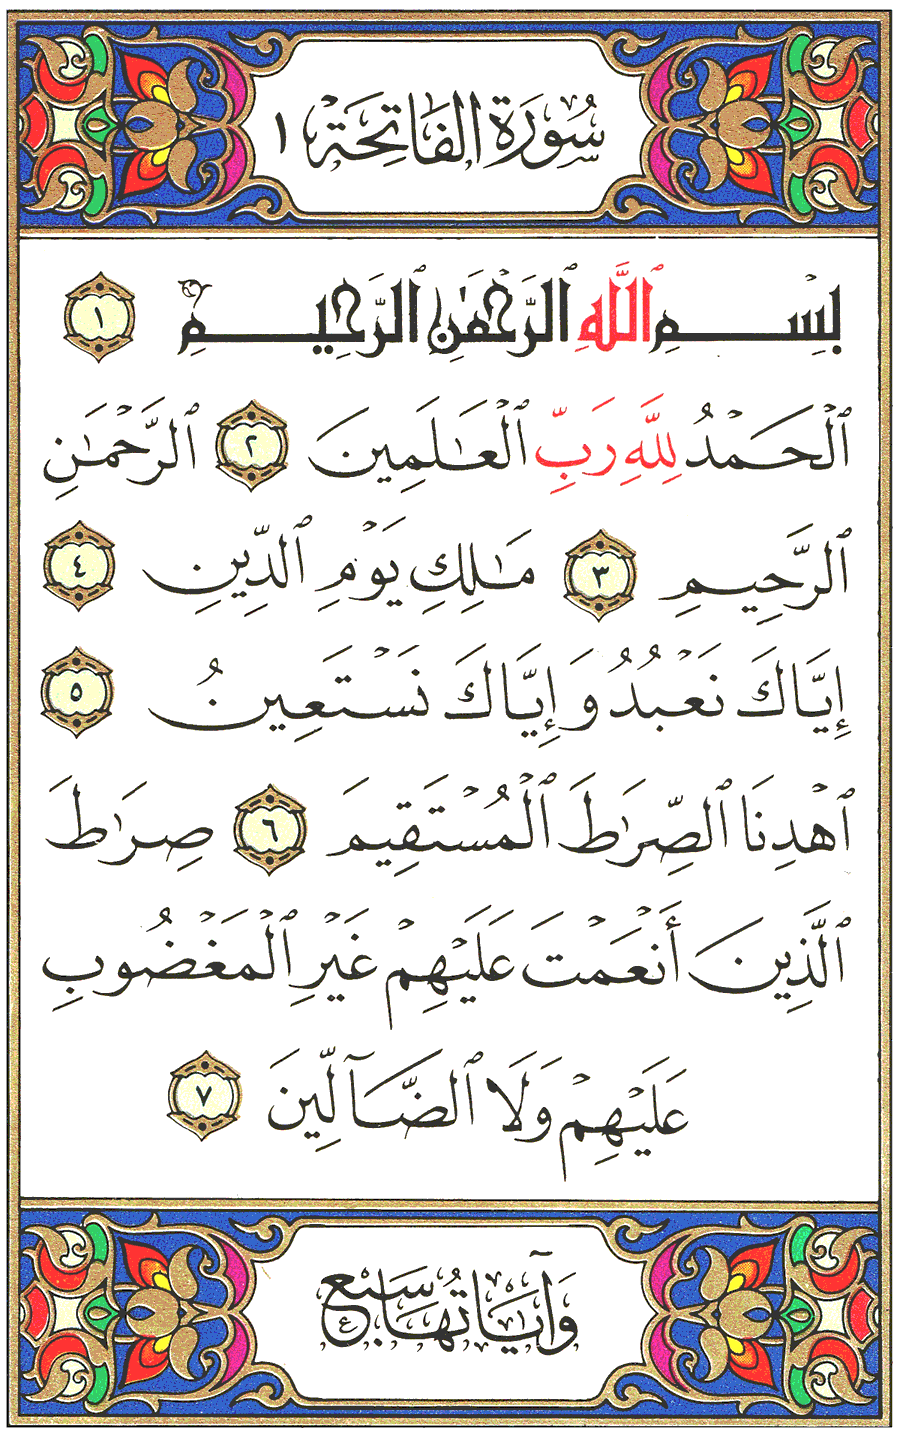 Surah Al-Fatihah 